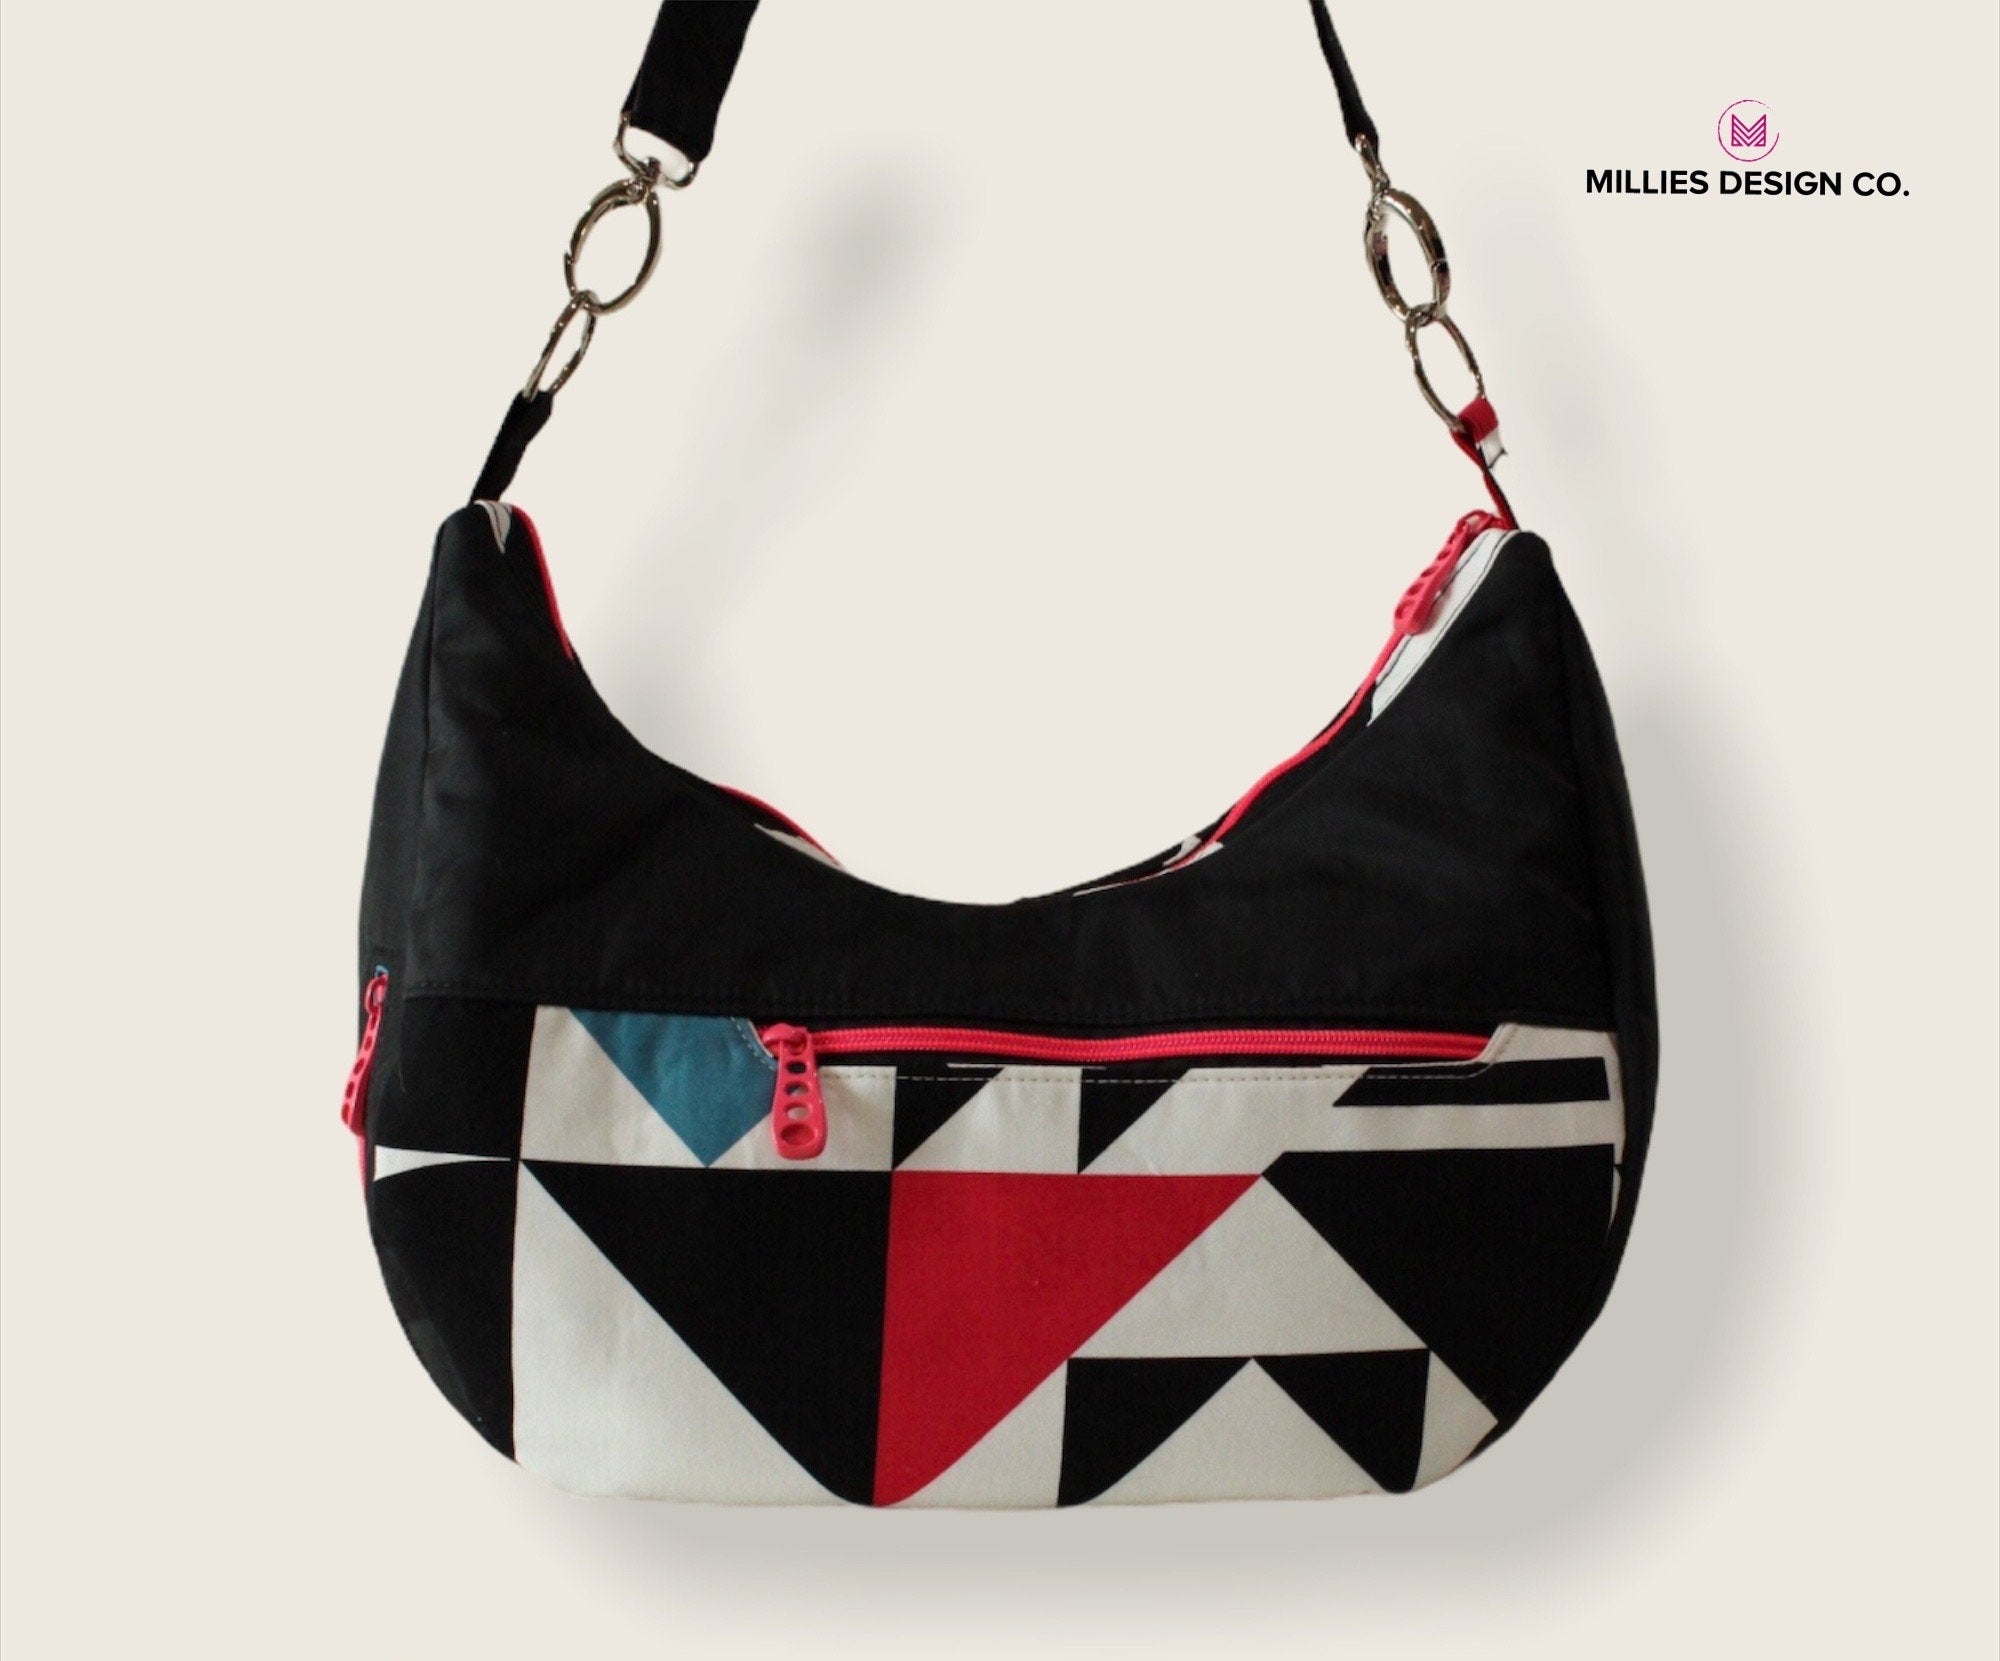 Custom Handbag - Black Nylon with Cotton Accents